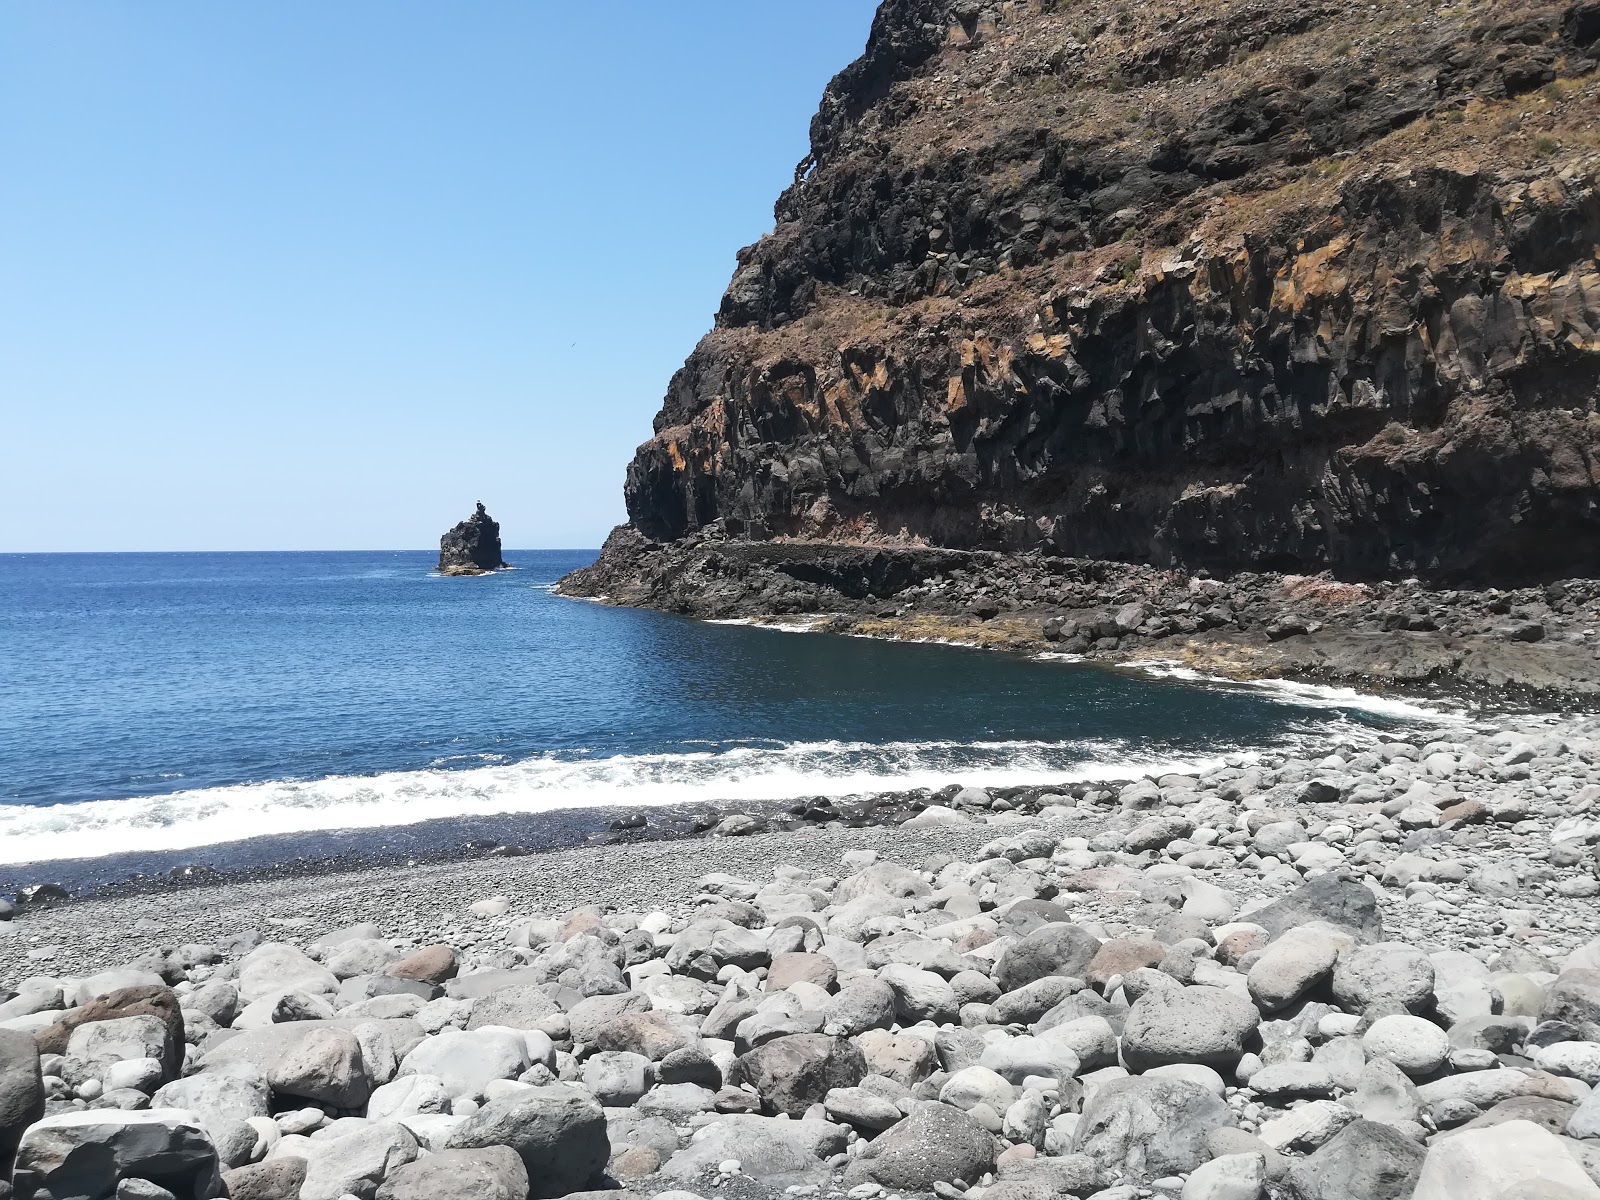 Fotografija Playa de Iguala z sivi kamenček površino